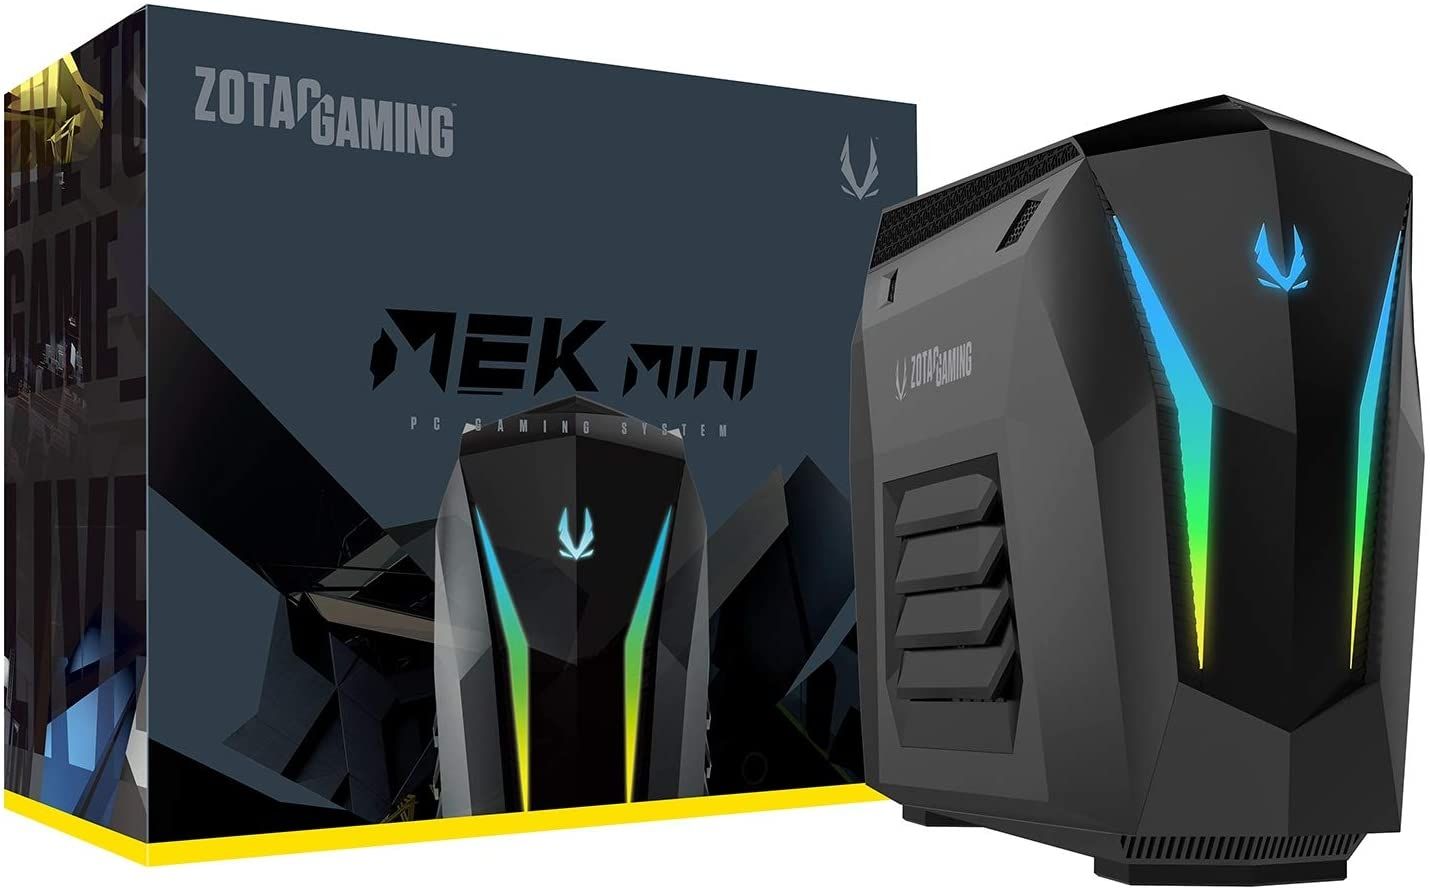 ZOTAC Gaming Mek Mini front and box